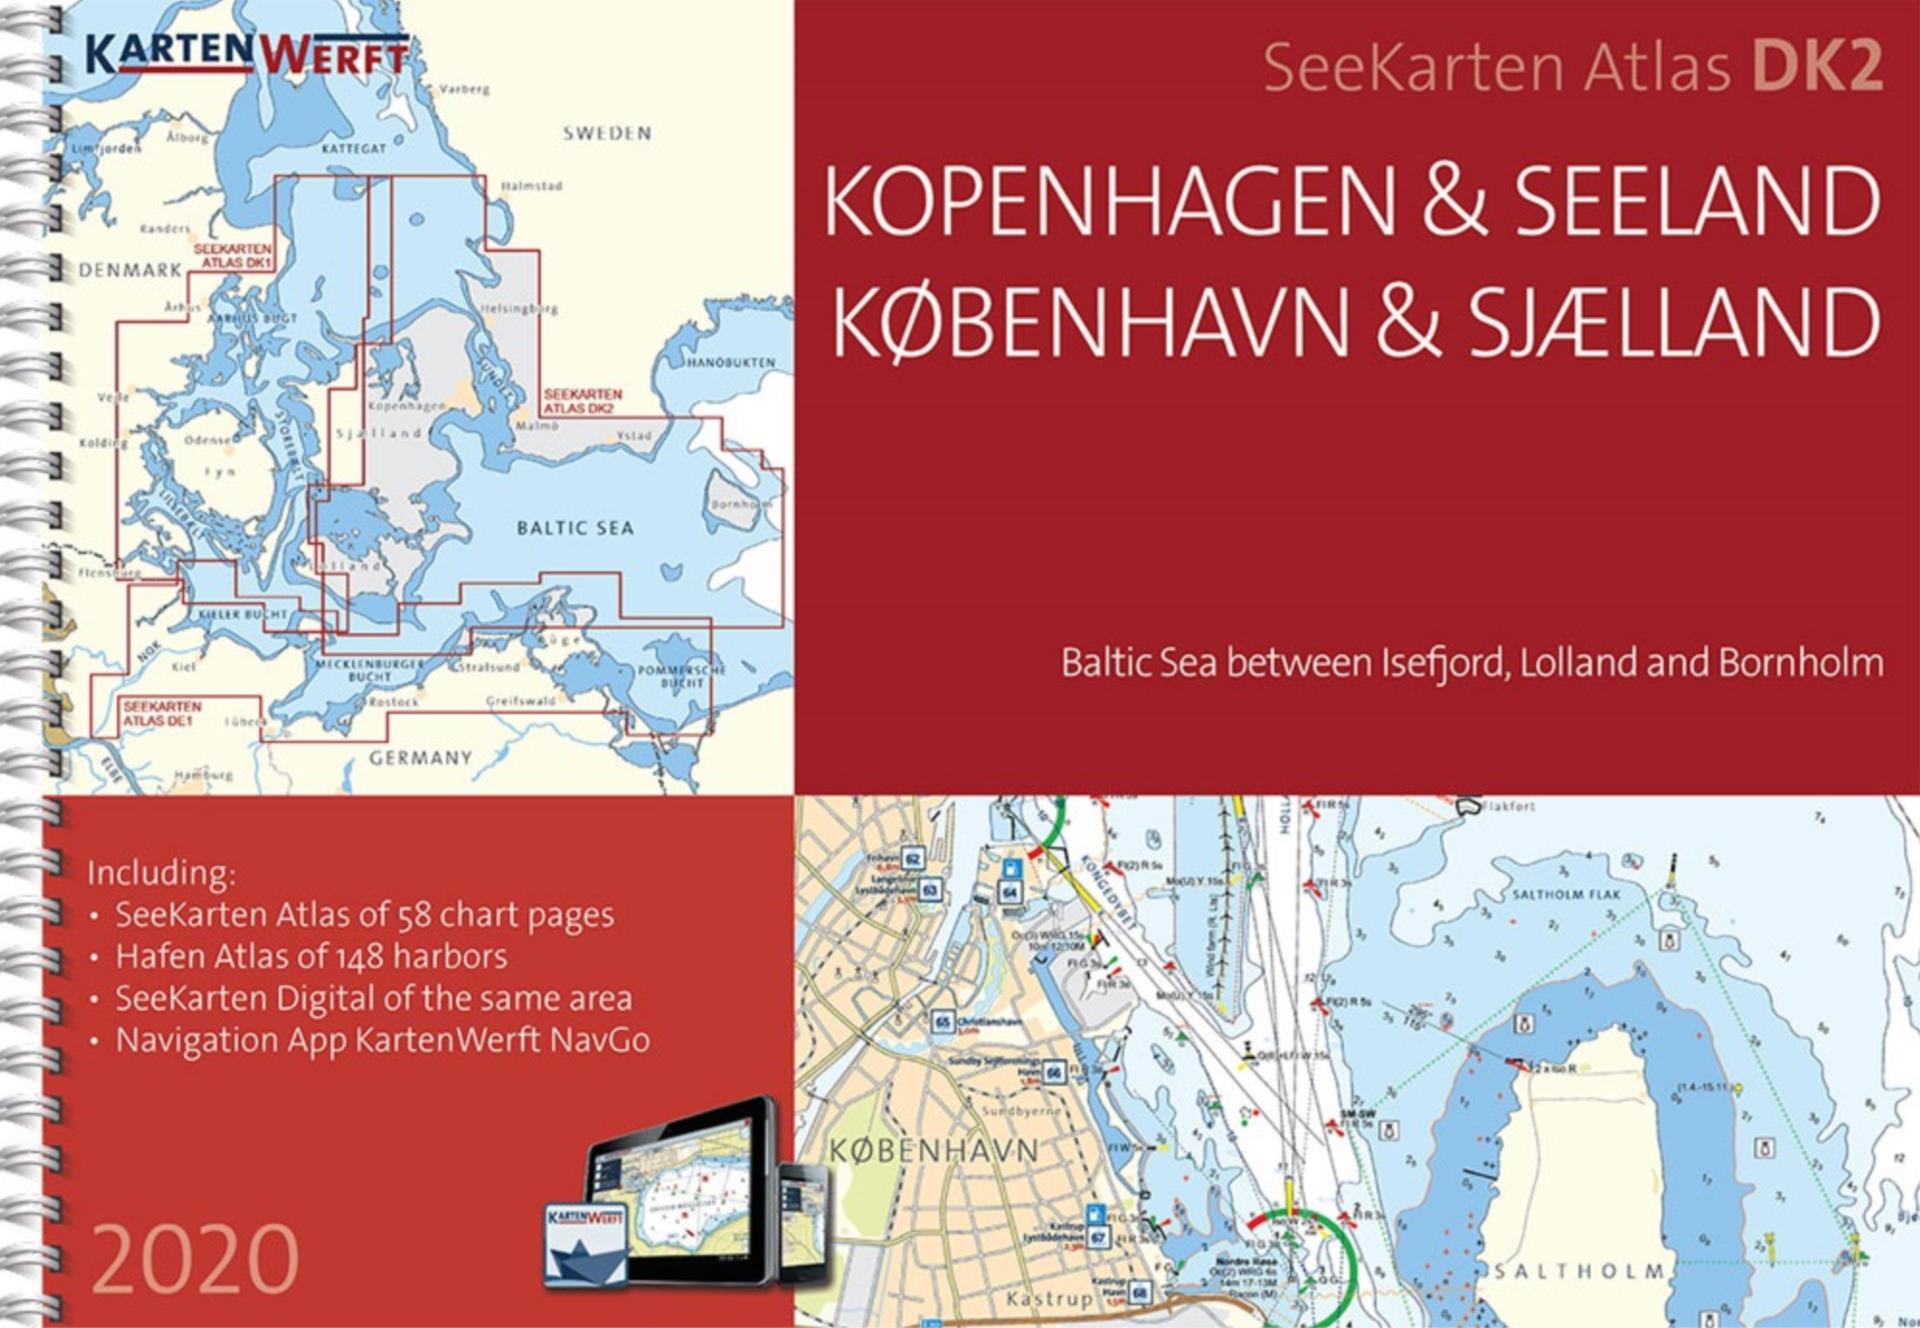 Kartenwerft Seekarten Atlas DK2, Kopenhagen & Seeland